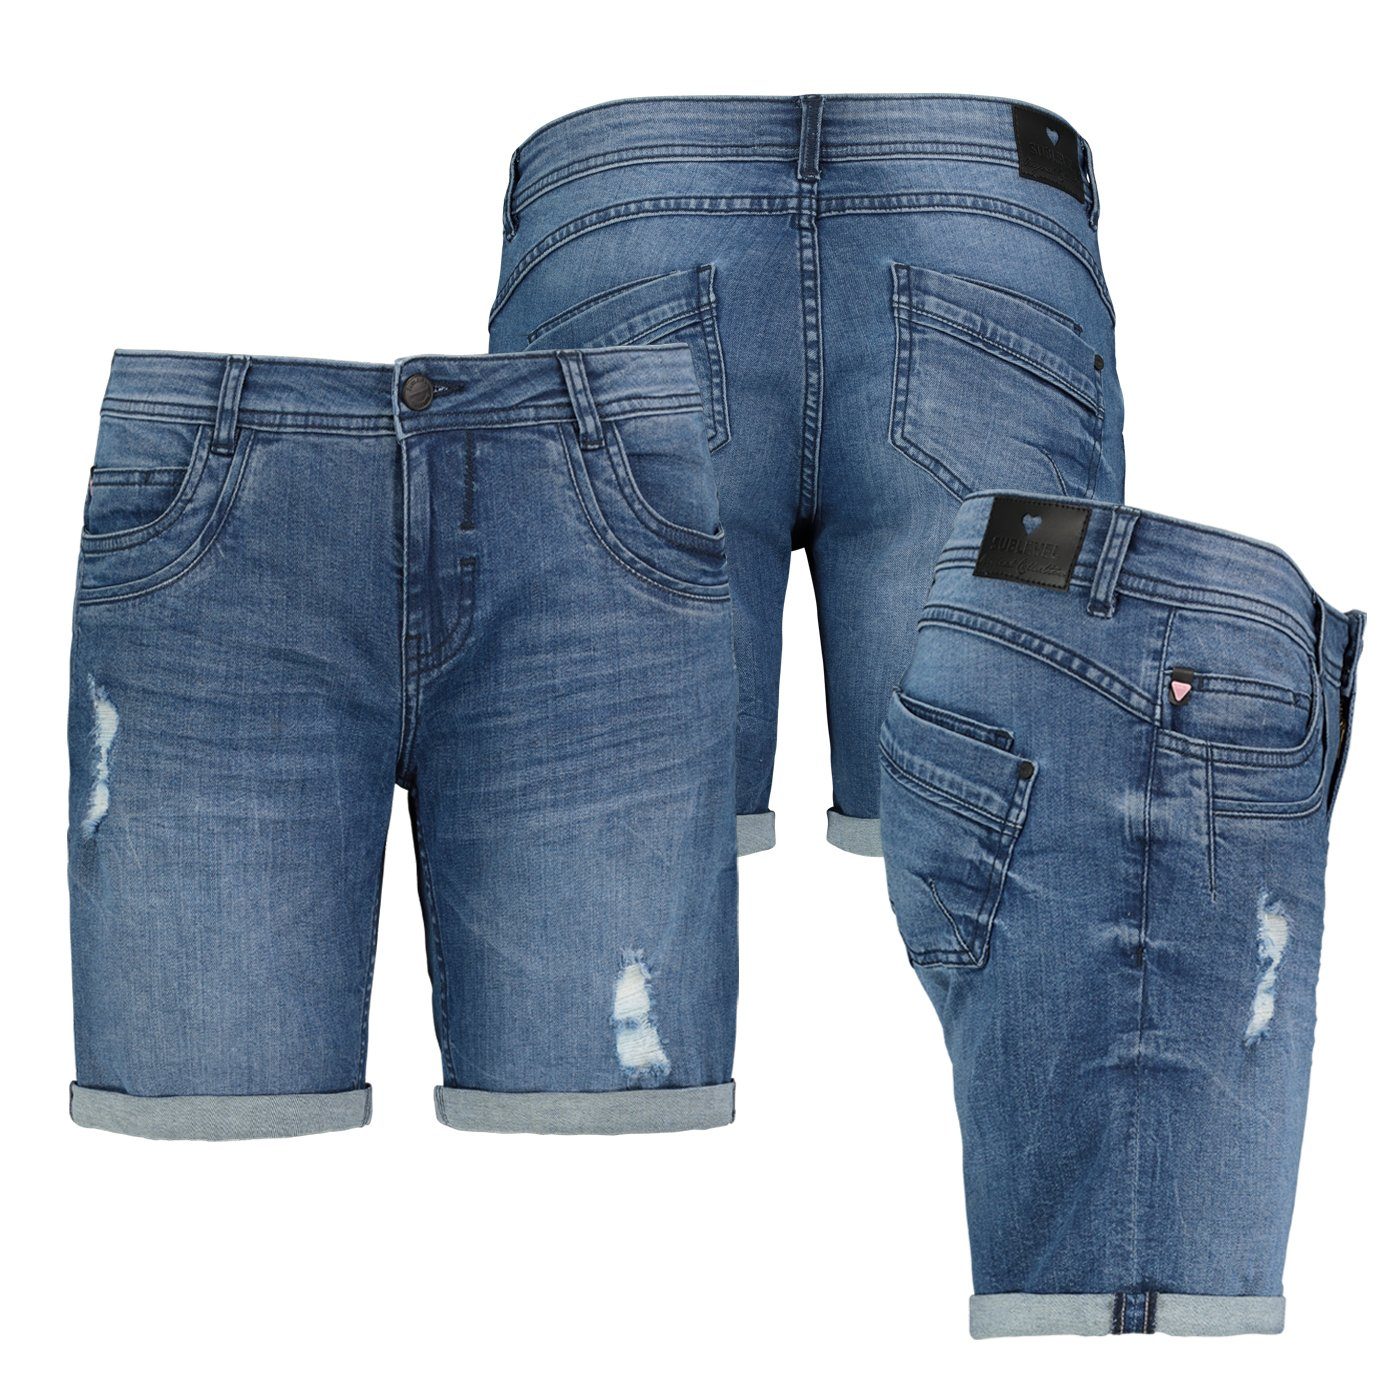 SUBLEVEL Bermudas Damen Jeans Shorts Bermuda Kurze Hose Shorts Short Denim Stretch Denim Middle Blue